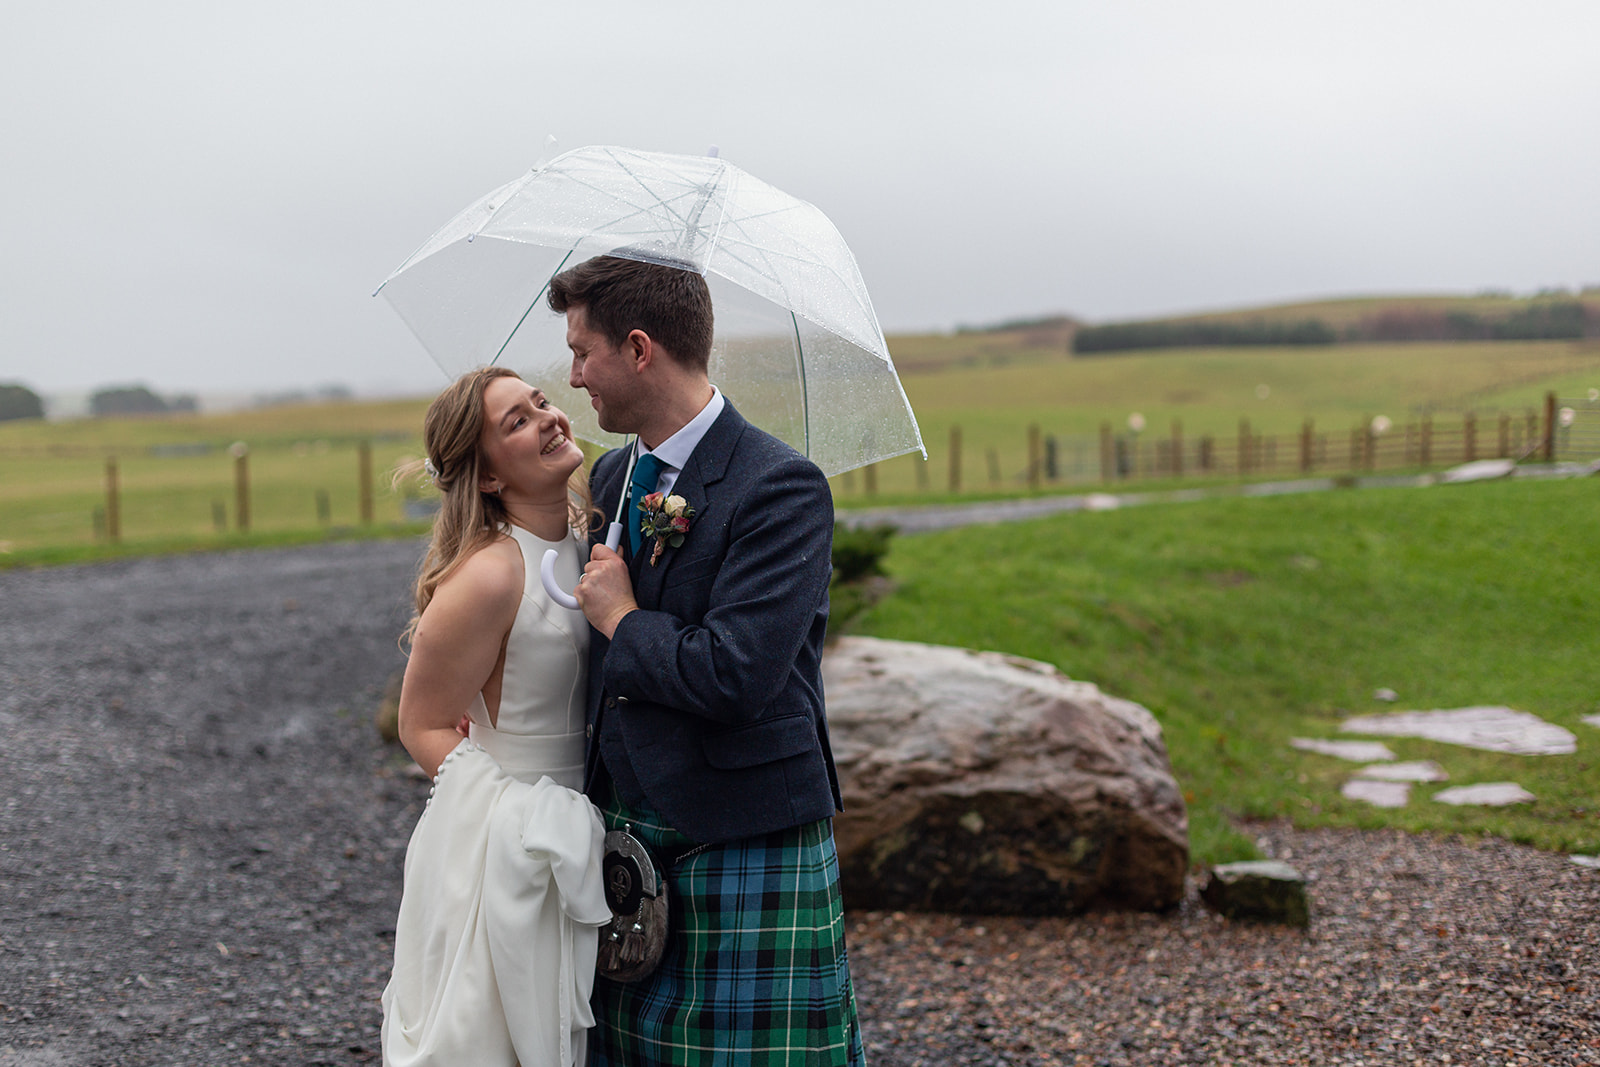 wedding couple in the rain under an umbrella - Cairns Farm Estate